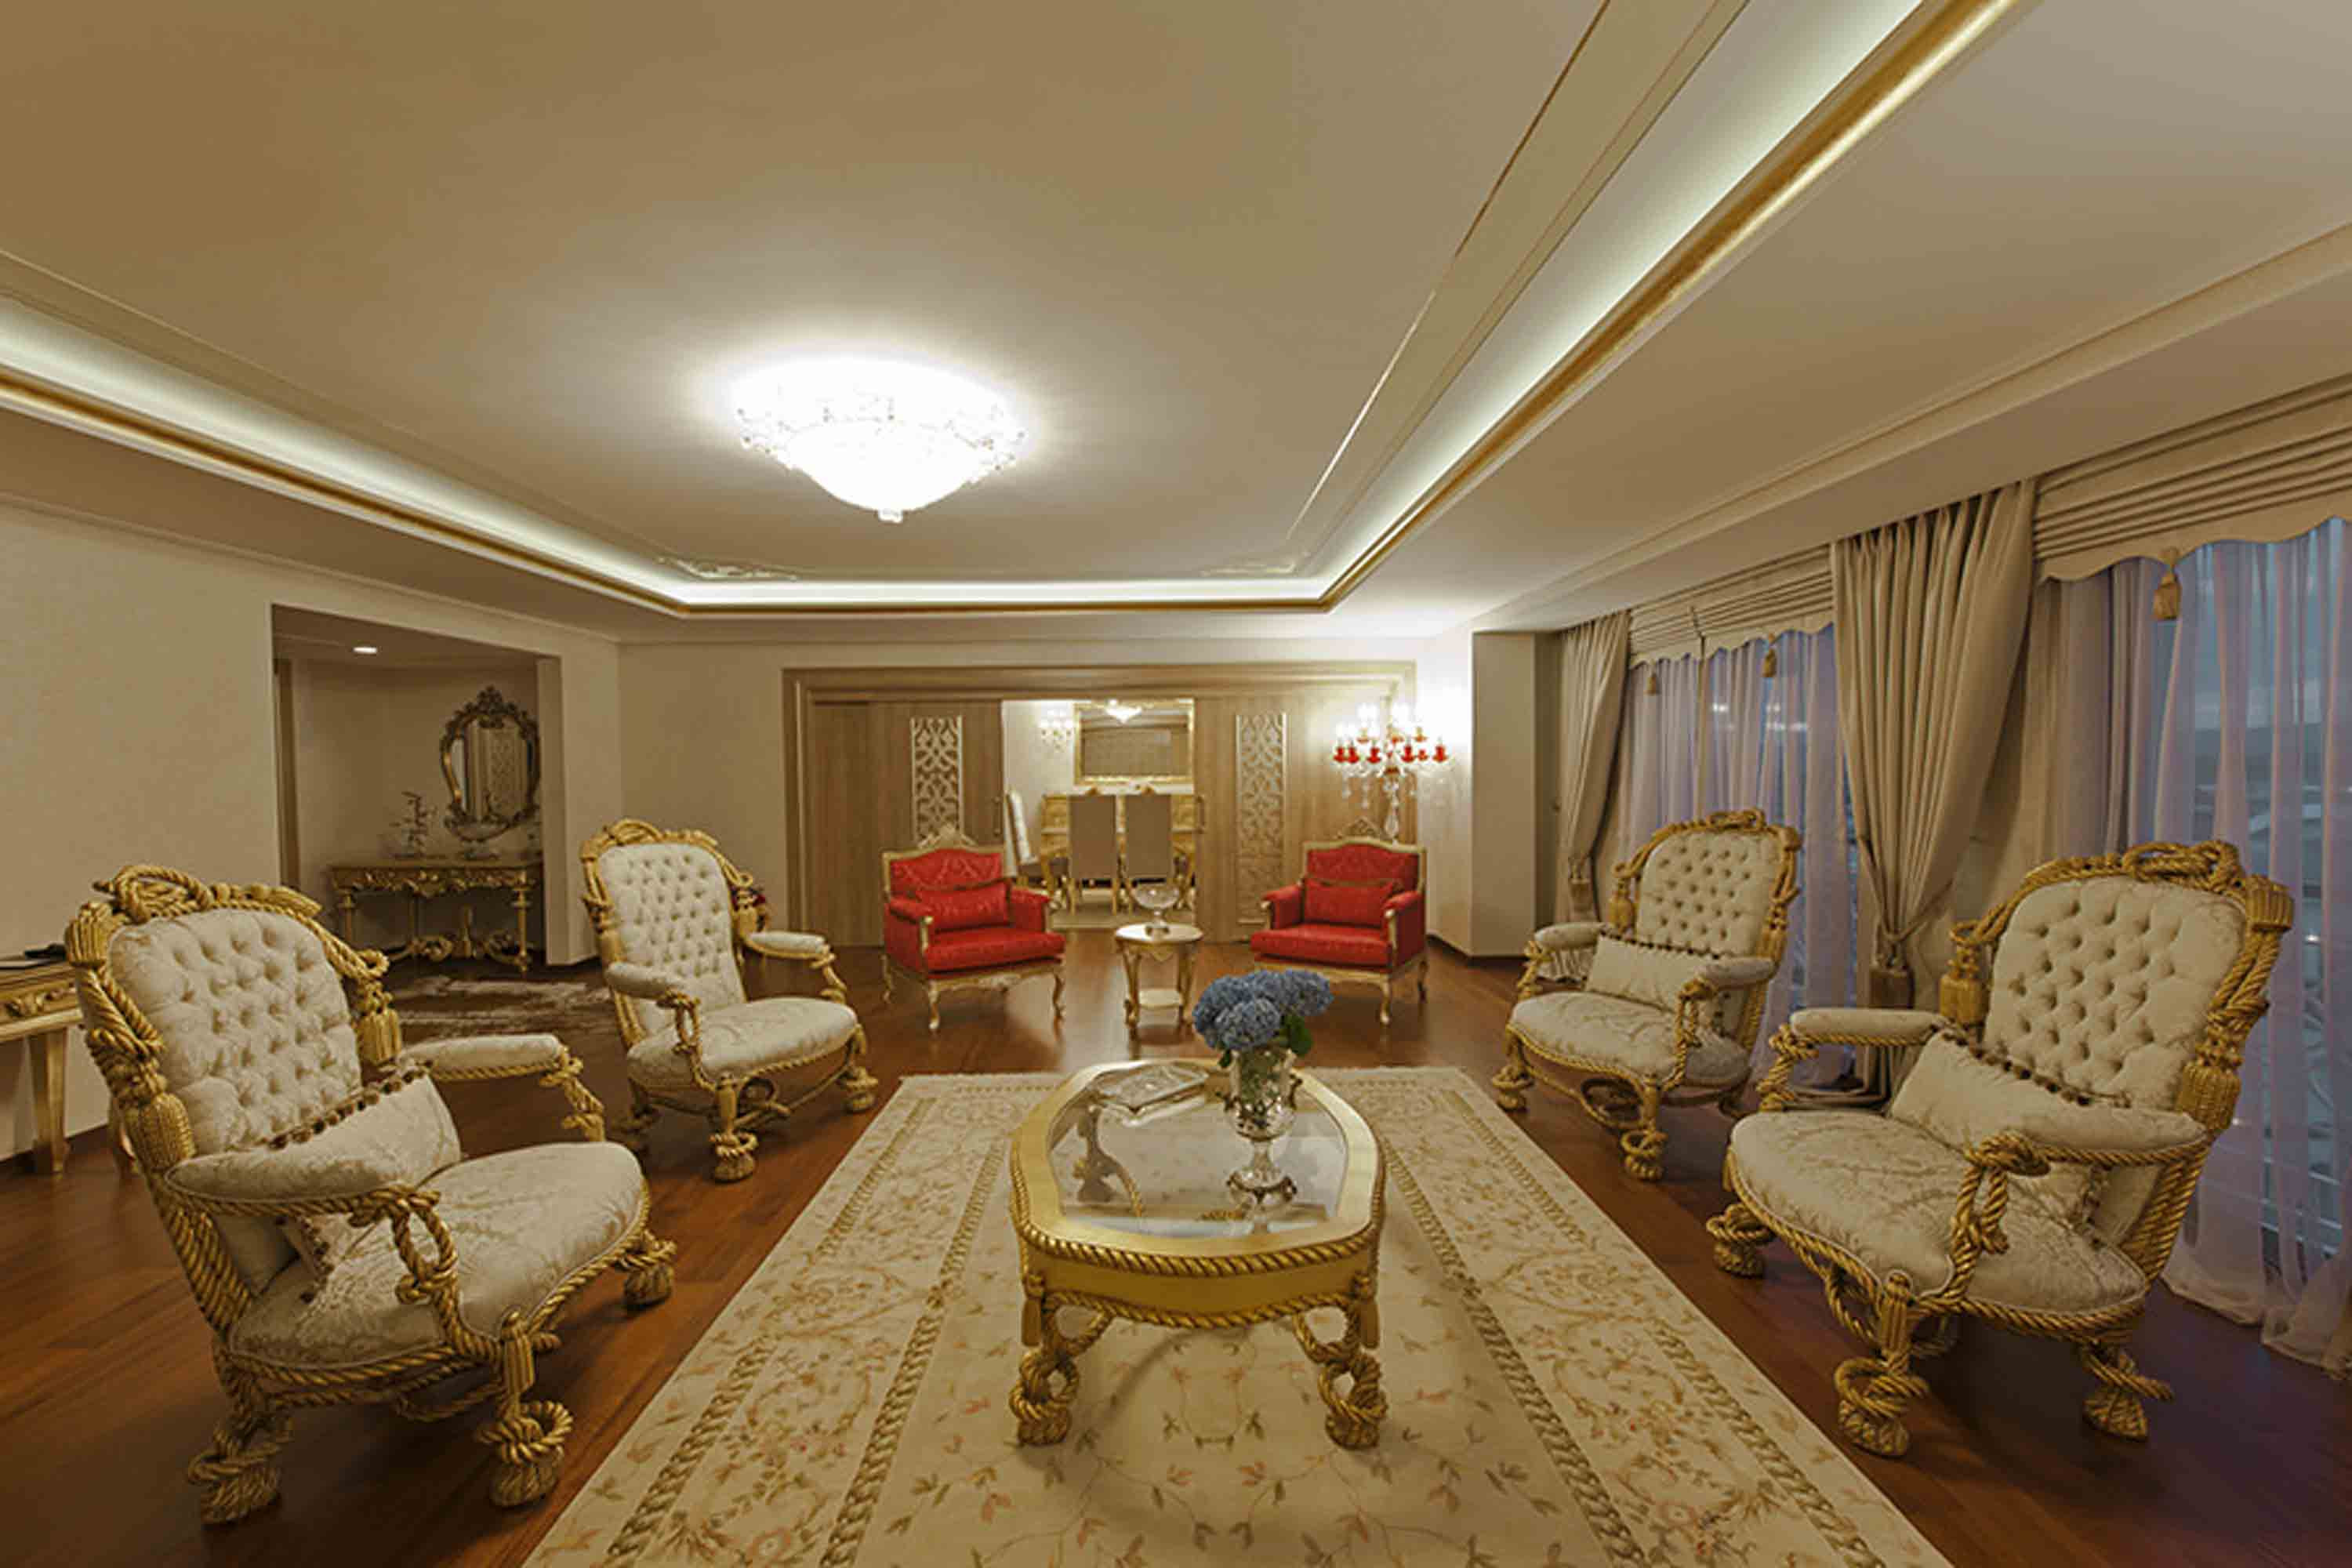 Presidential Suite 2